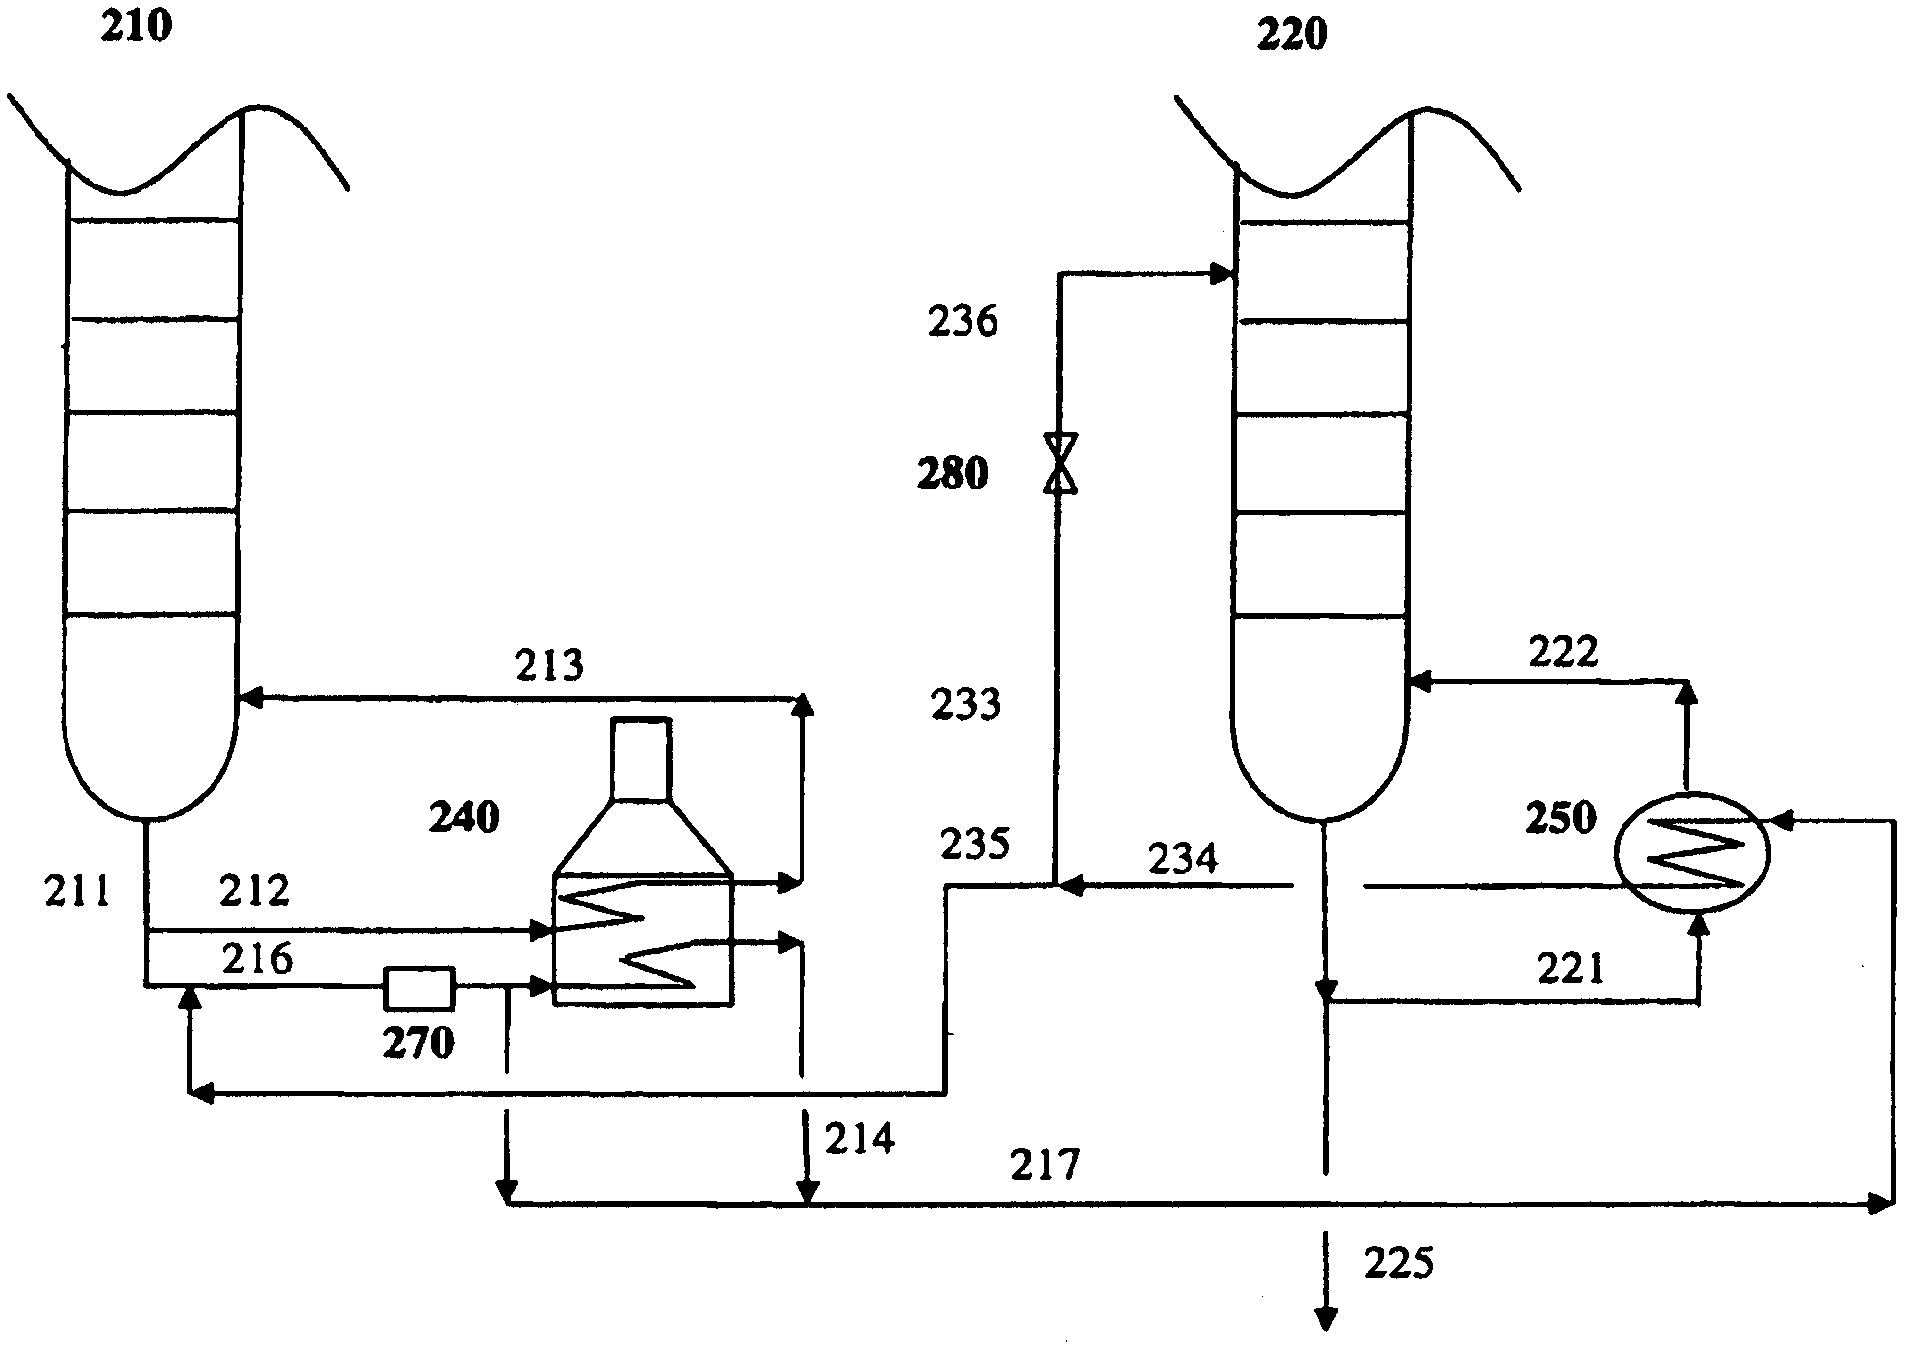 Distillation process and multi-column heat-integrated distillation system